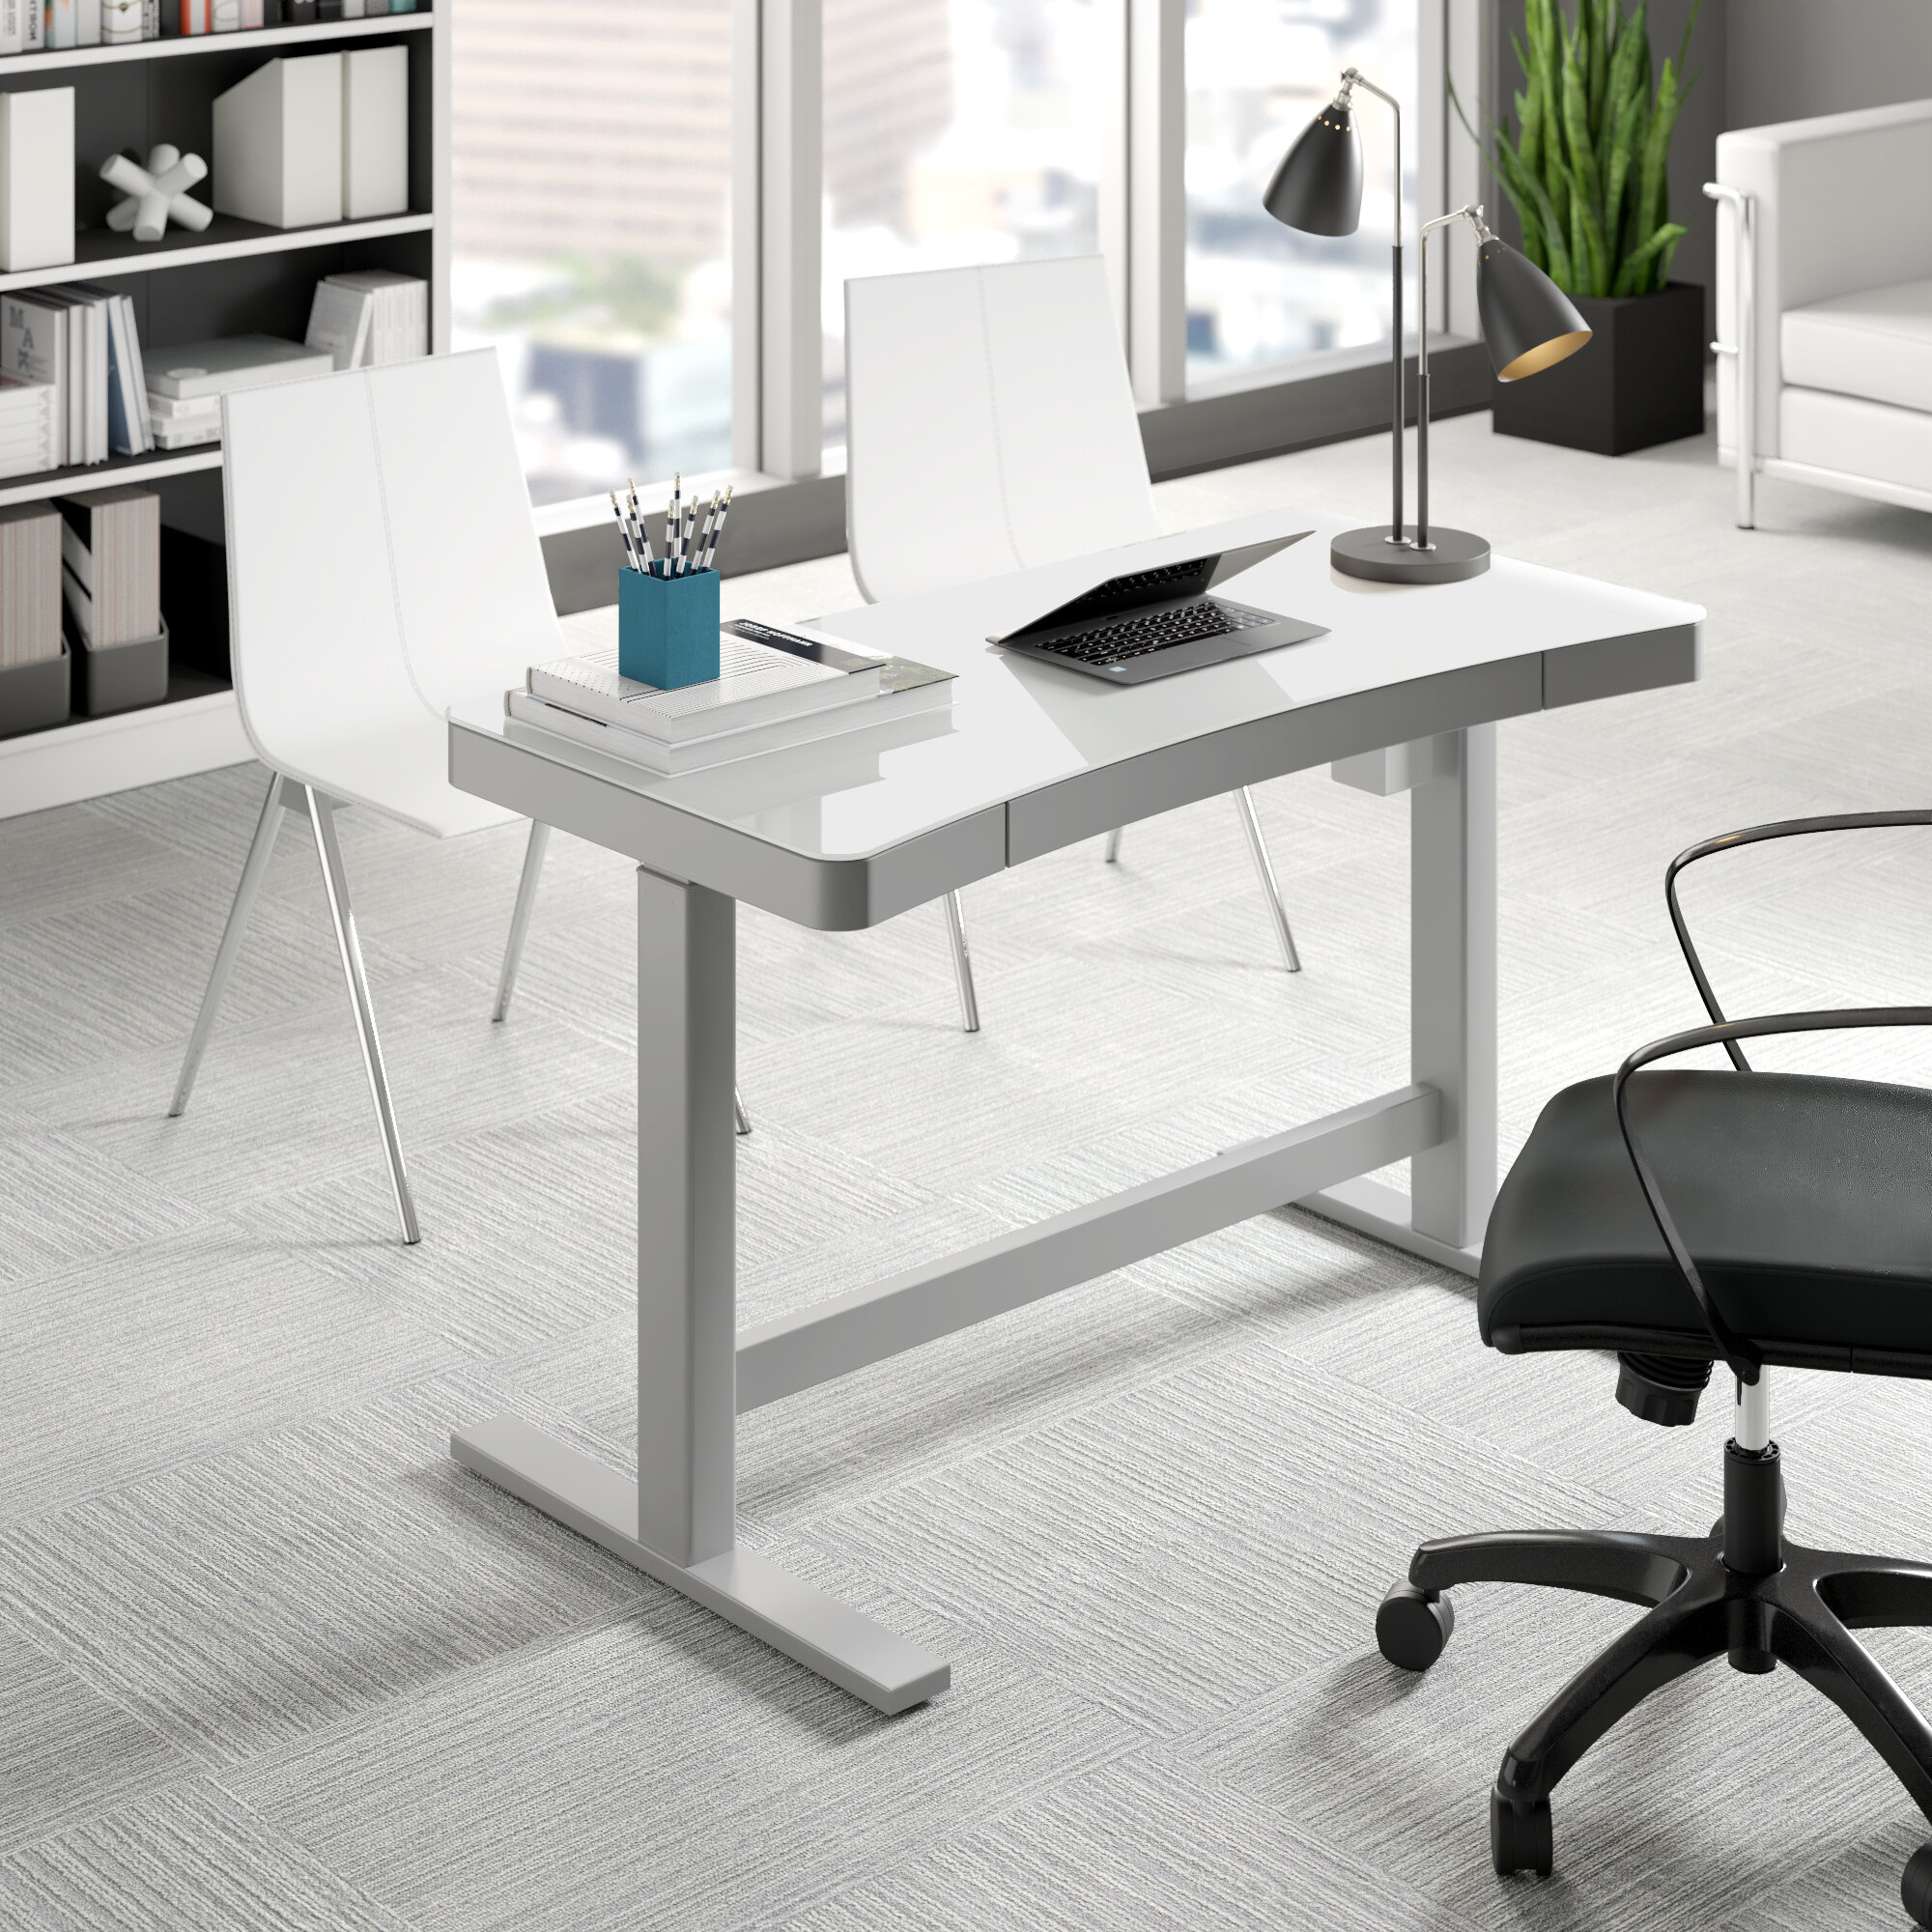 Upper Square Belda Height Adjustable Standing Desk Reviews Wayfair